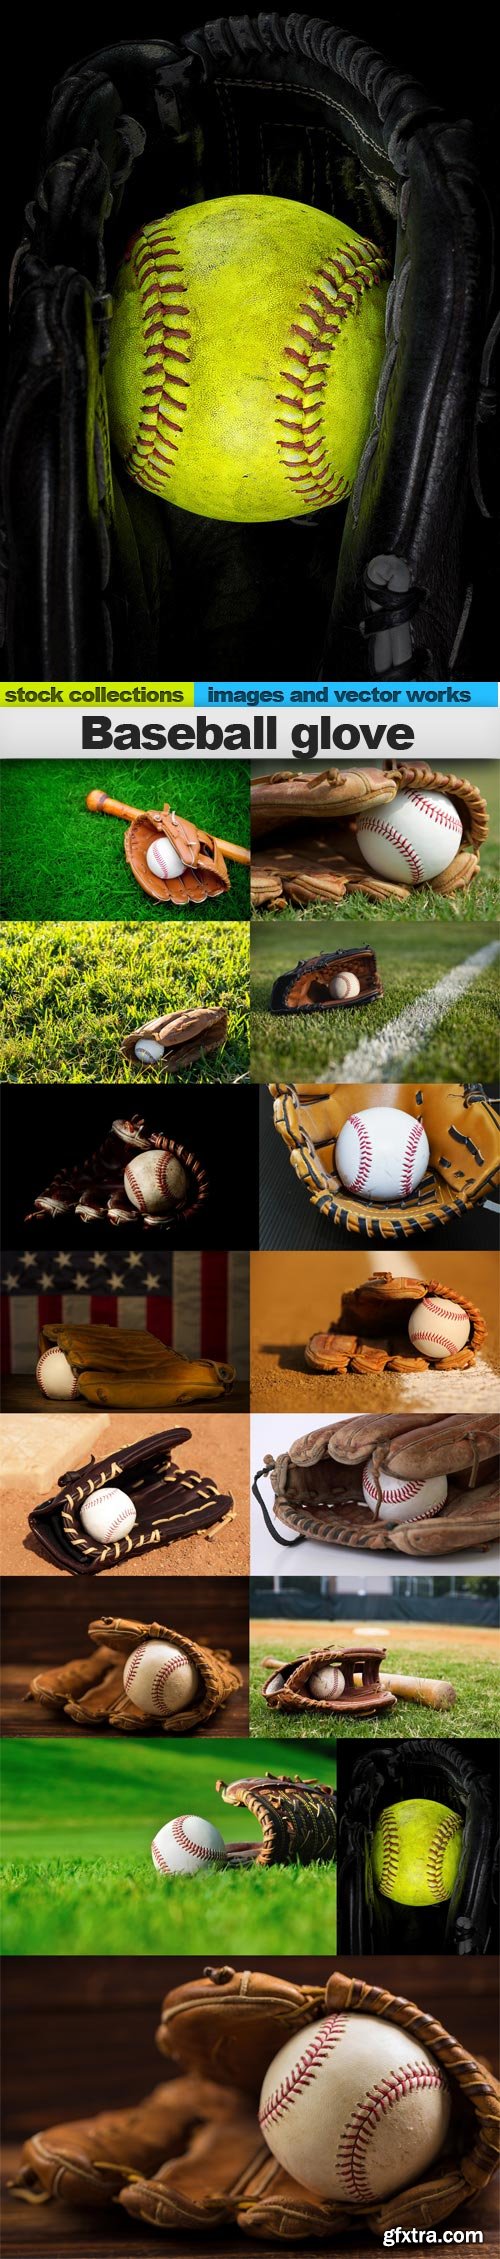 Baseball glove, 15 x UHQ JPEG